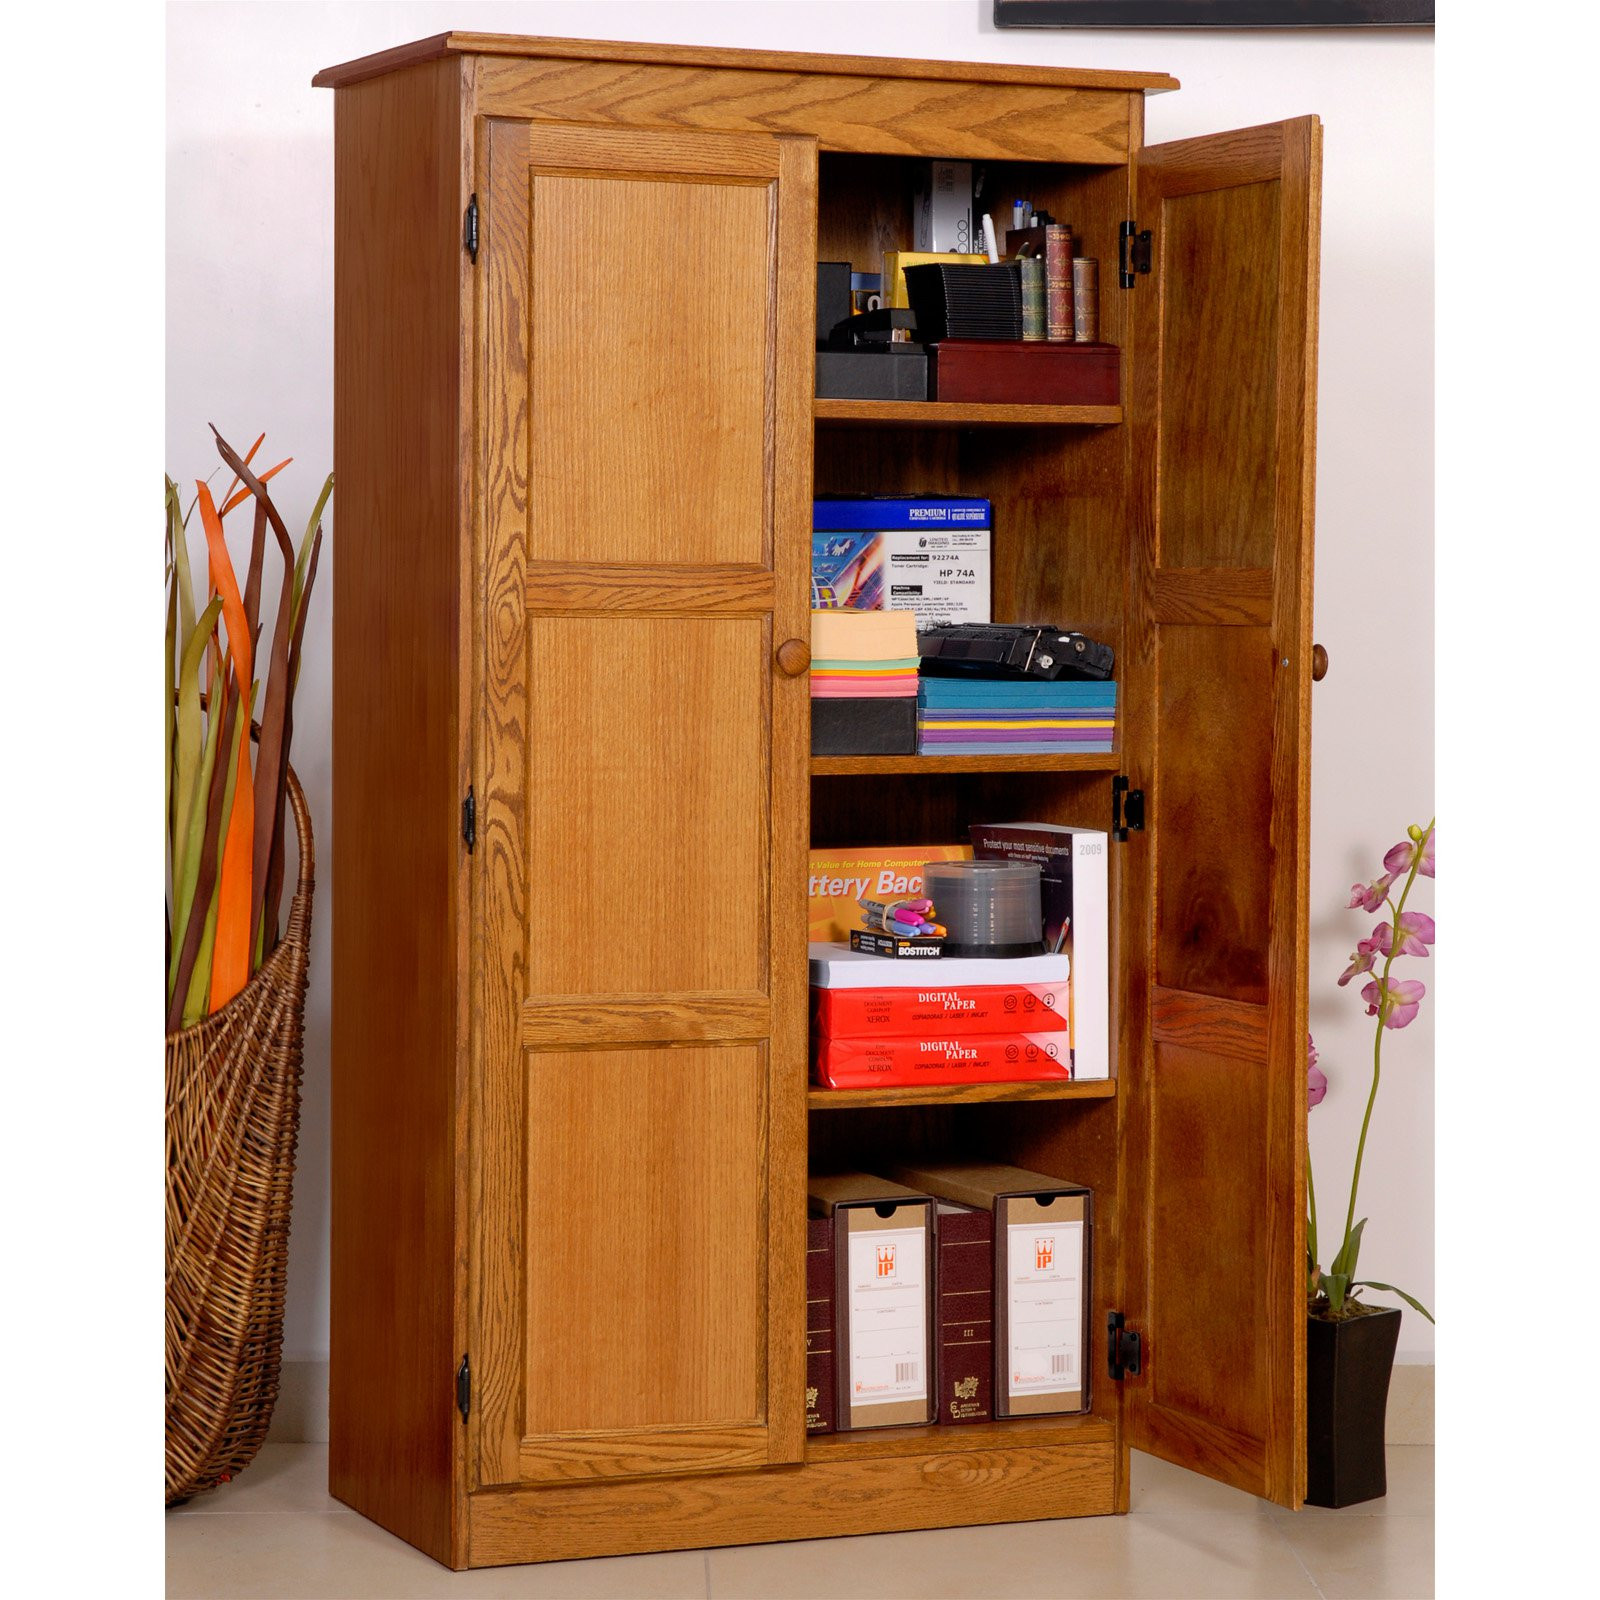 Kitchen Storage Furniture
 Concepts in Wood Dry Oak KT613A Storage Utility Closet